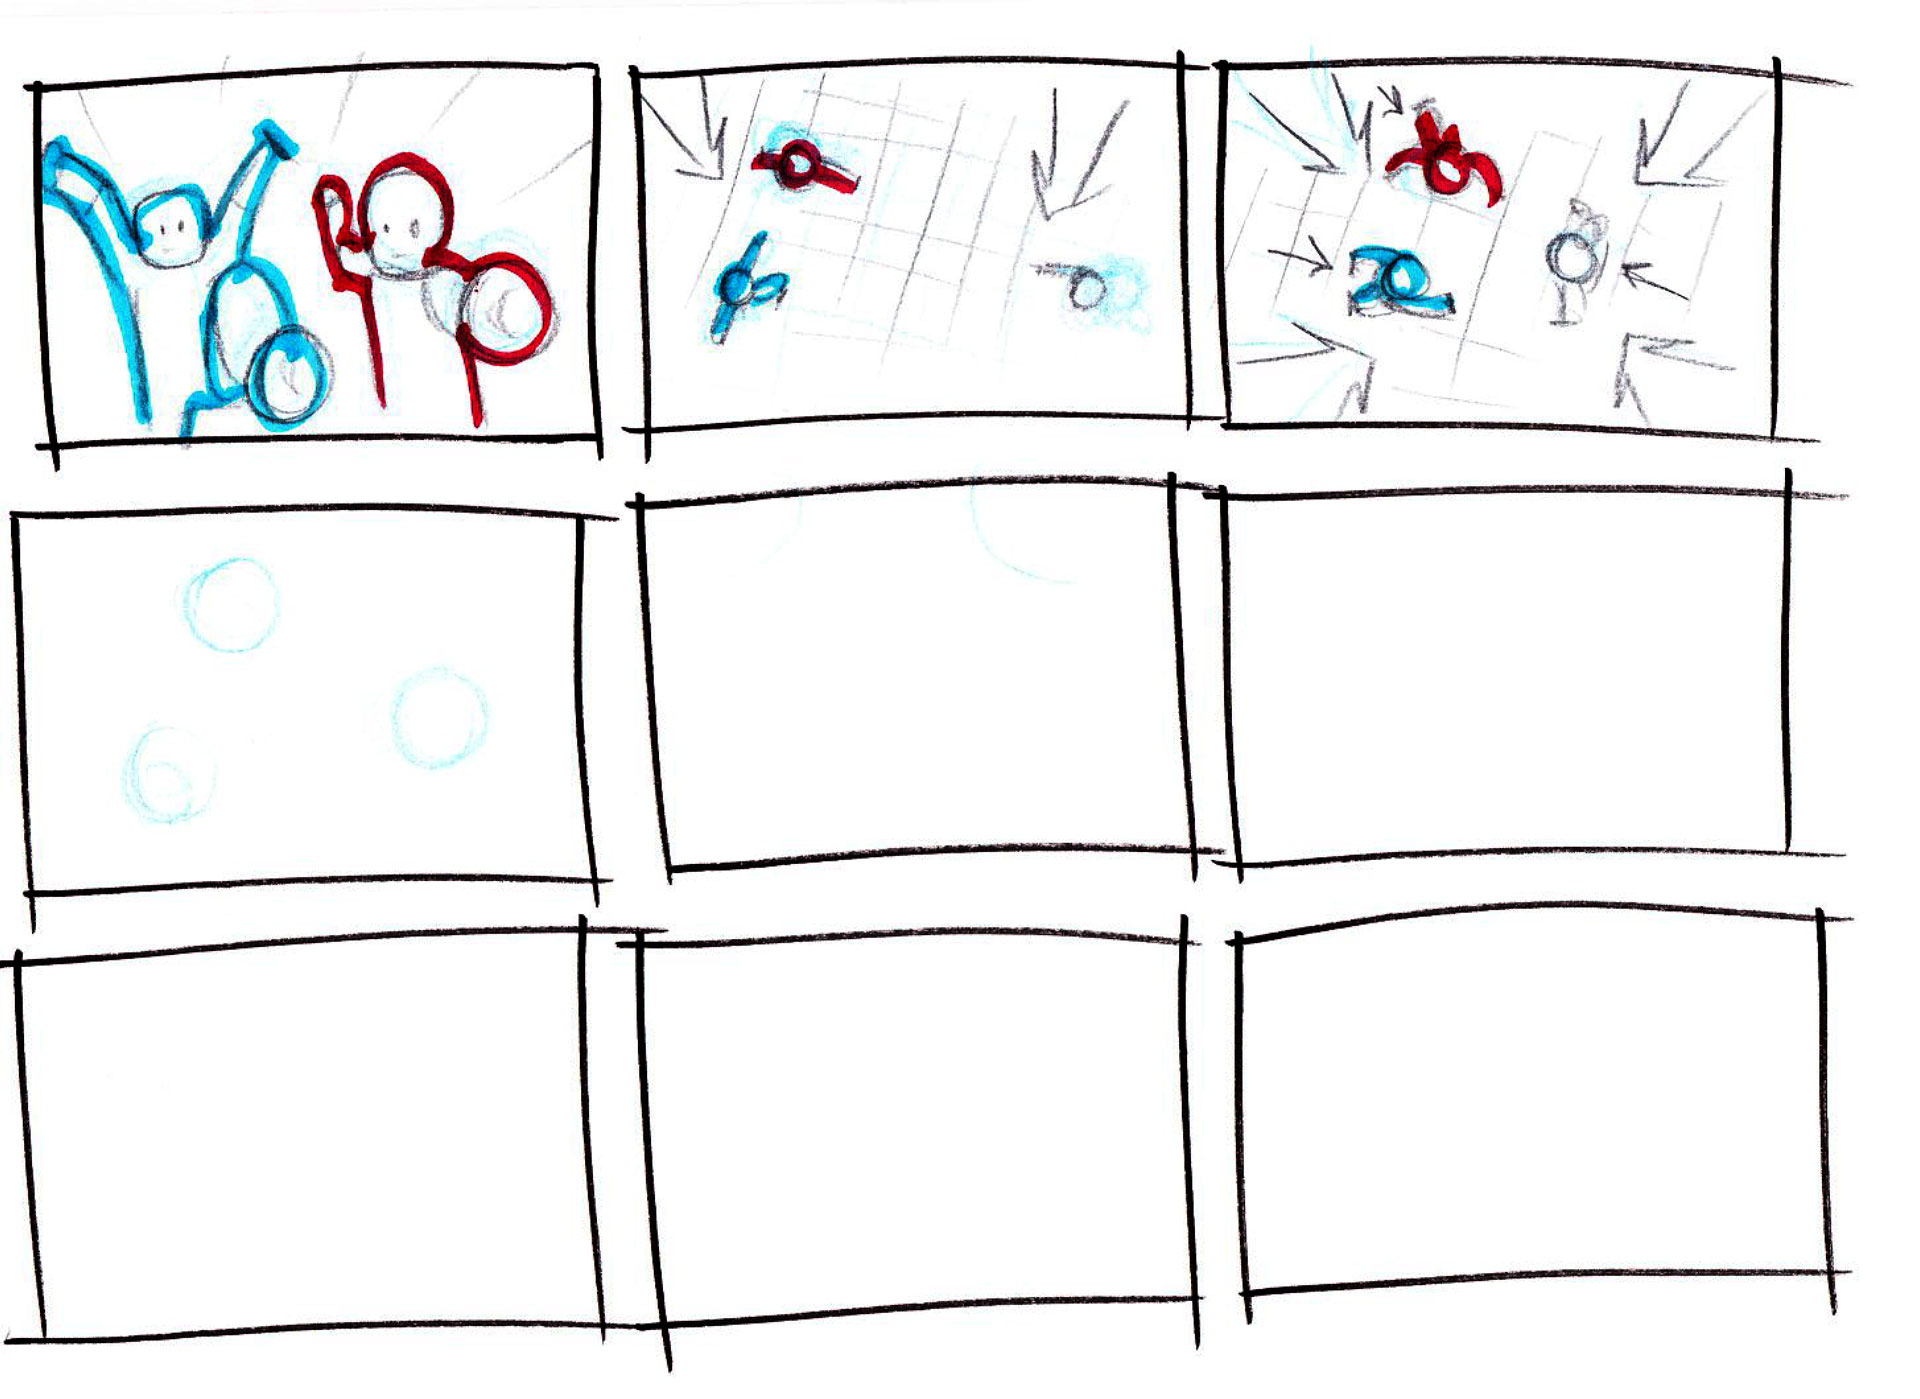 cubebot storyboards 04